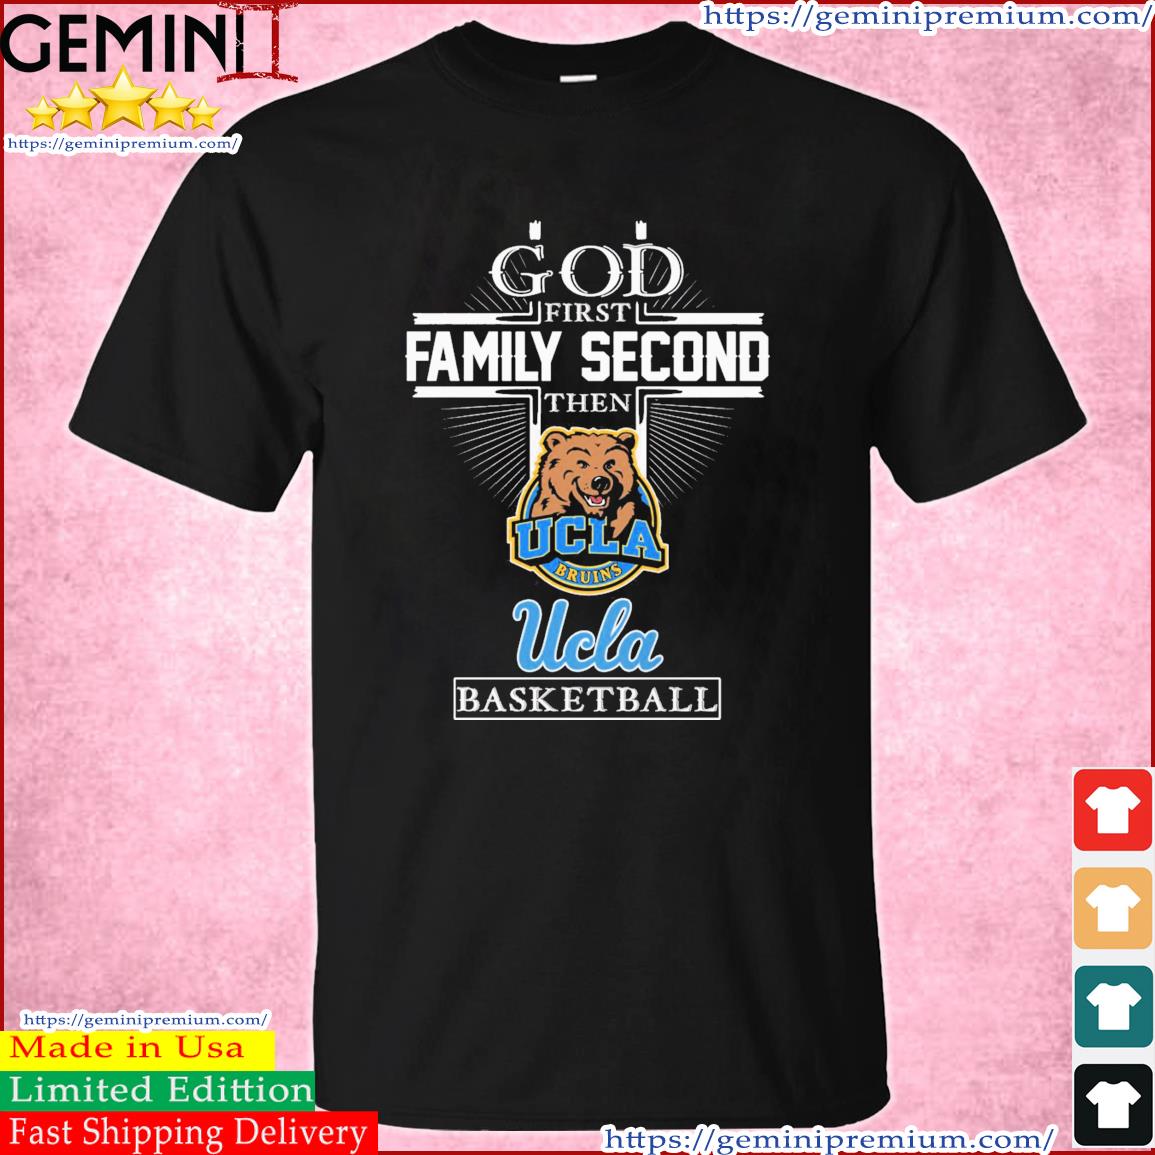 God Family Second First Then UCLA Bruins Basketball Shirt